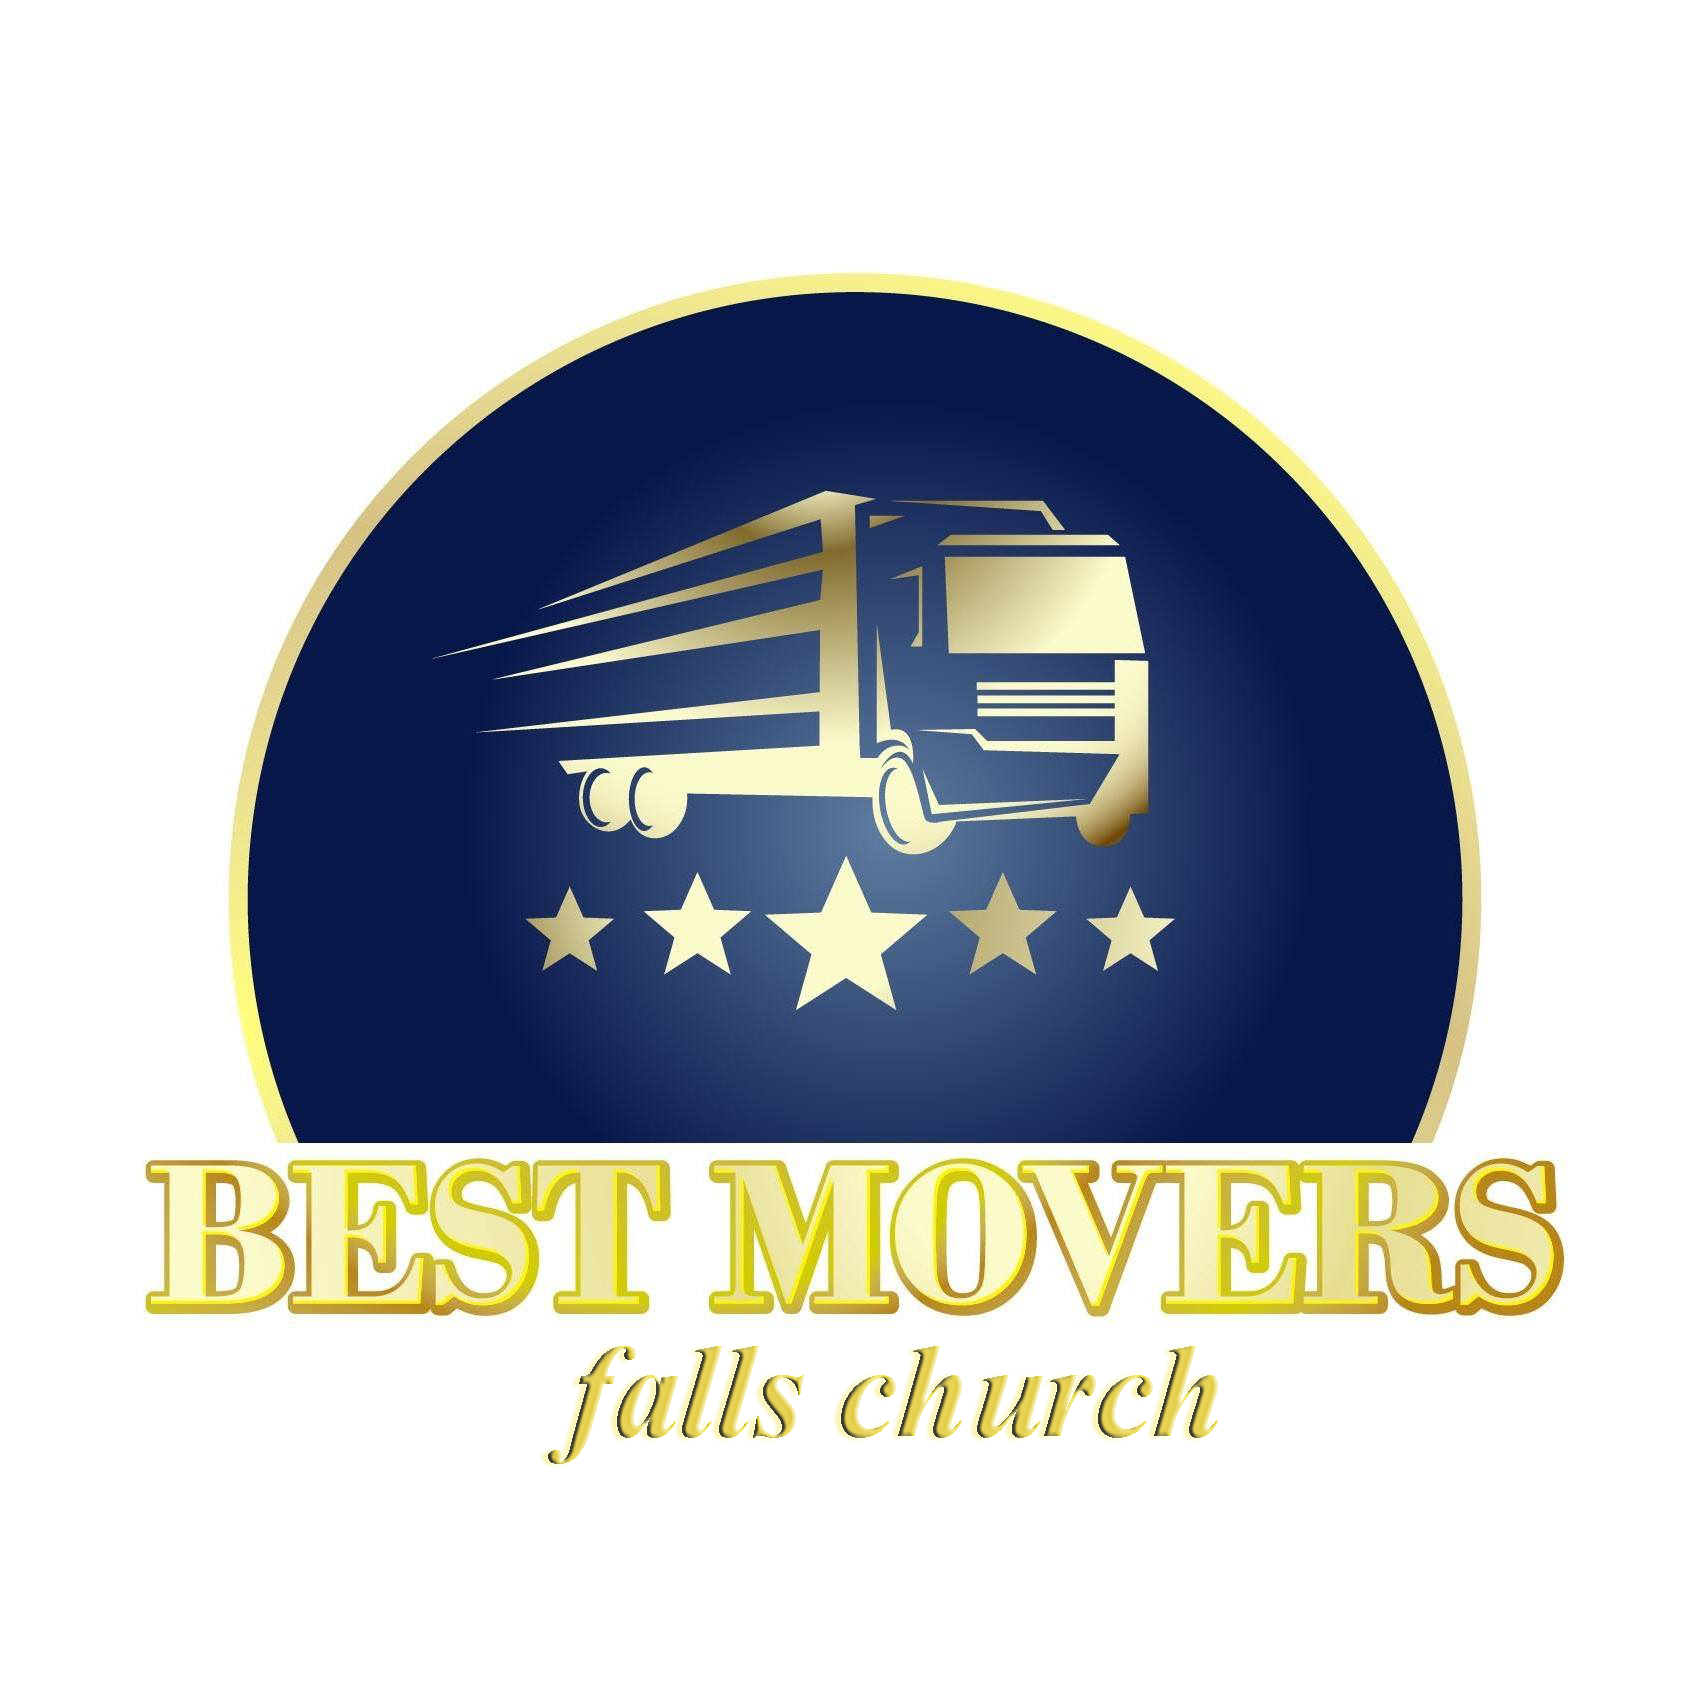 Best-movers-falls-church logos